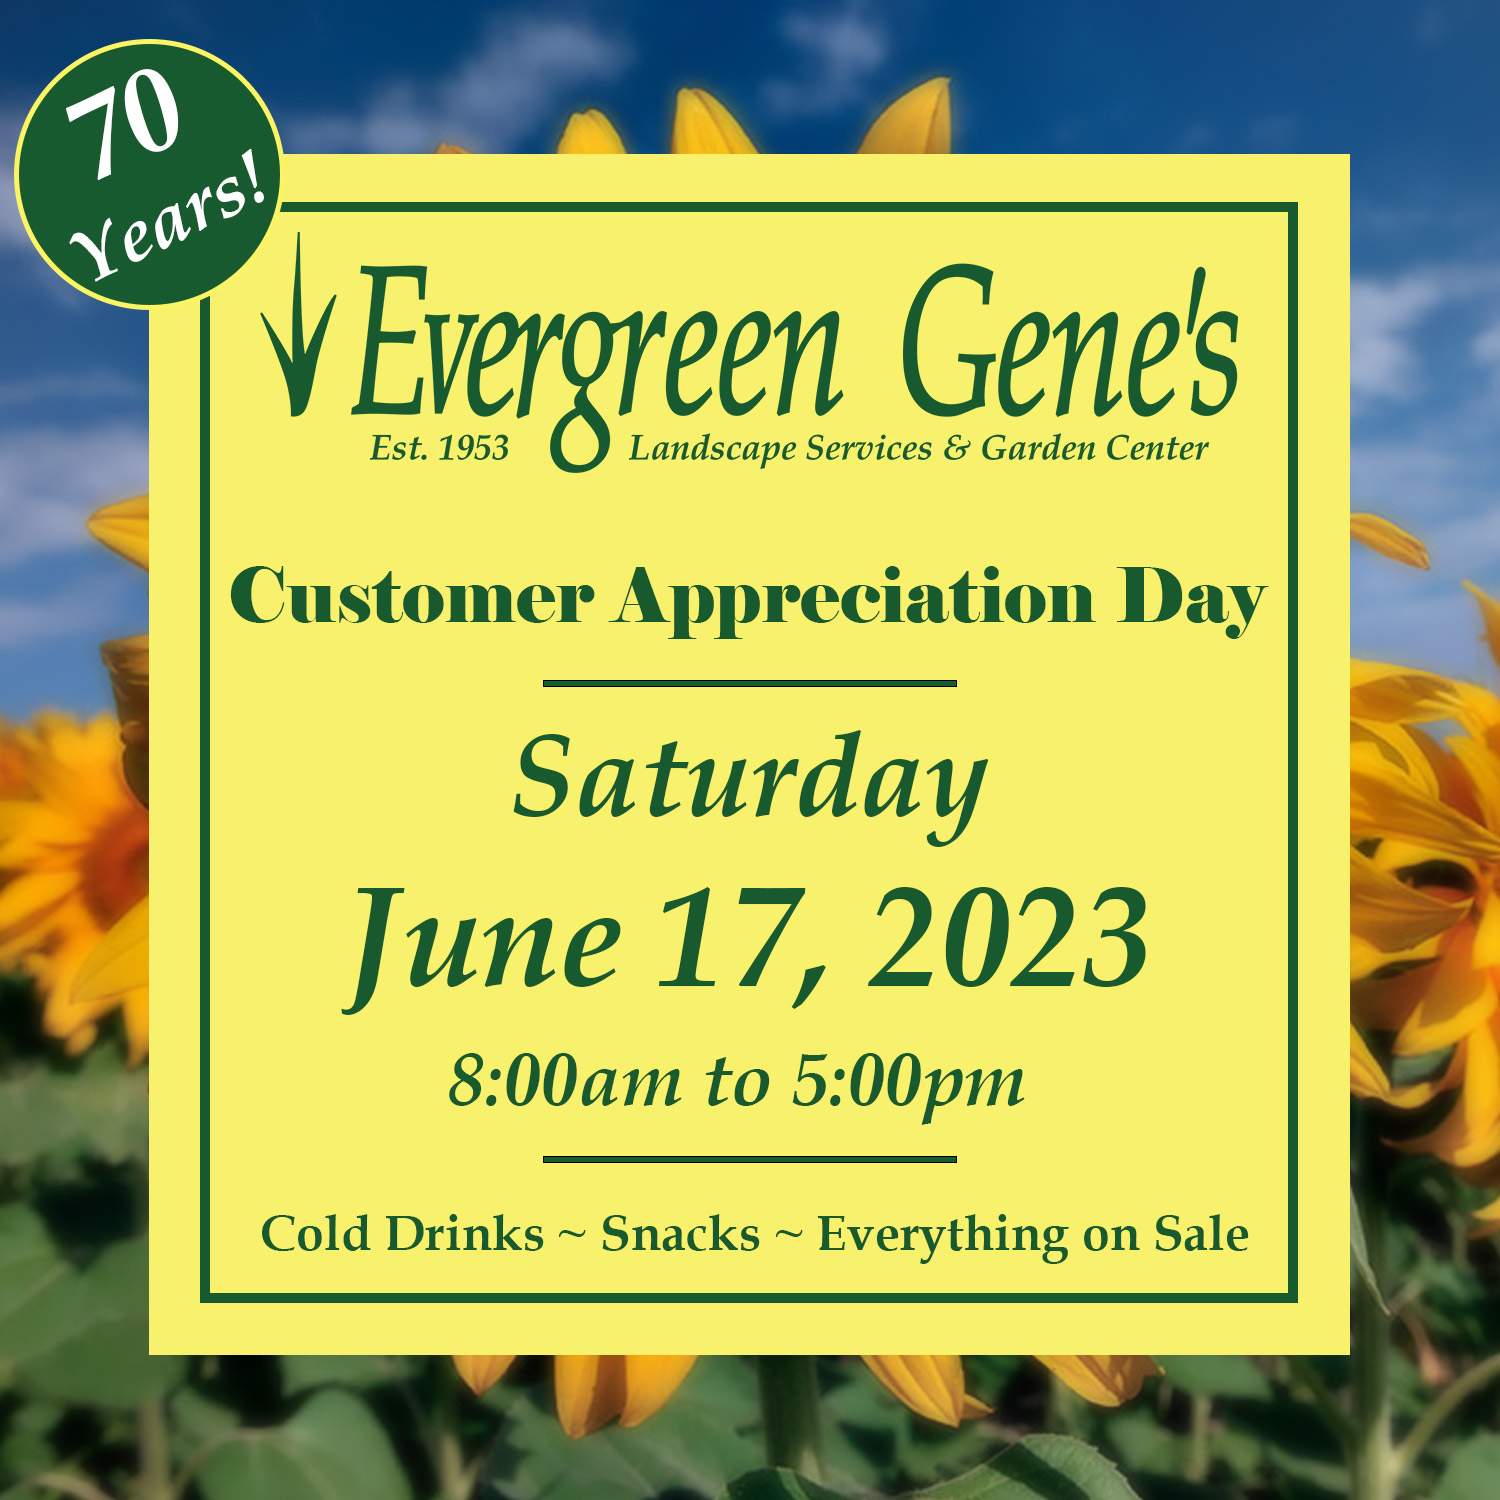 Evergreen Gene's Customer Appreciation Day 2023